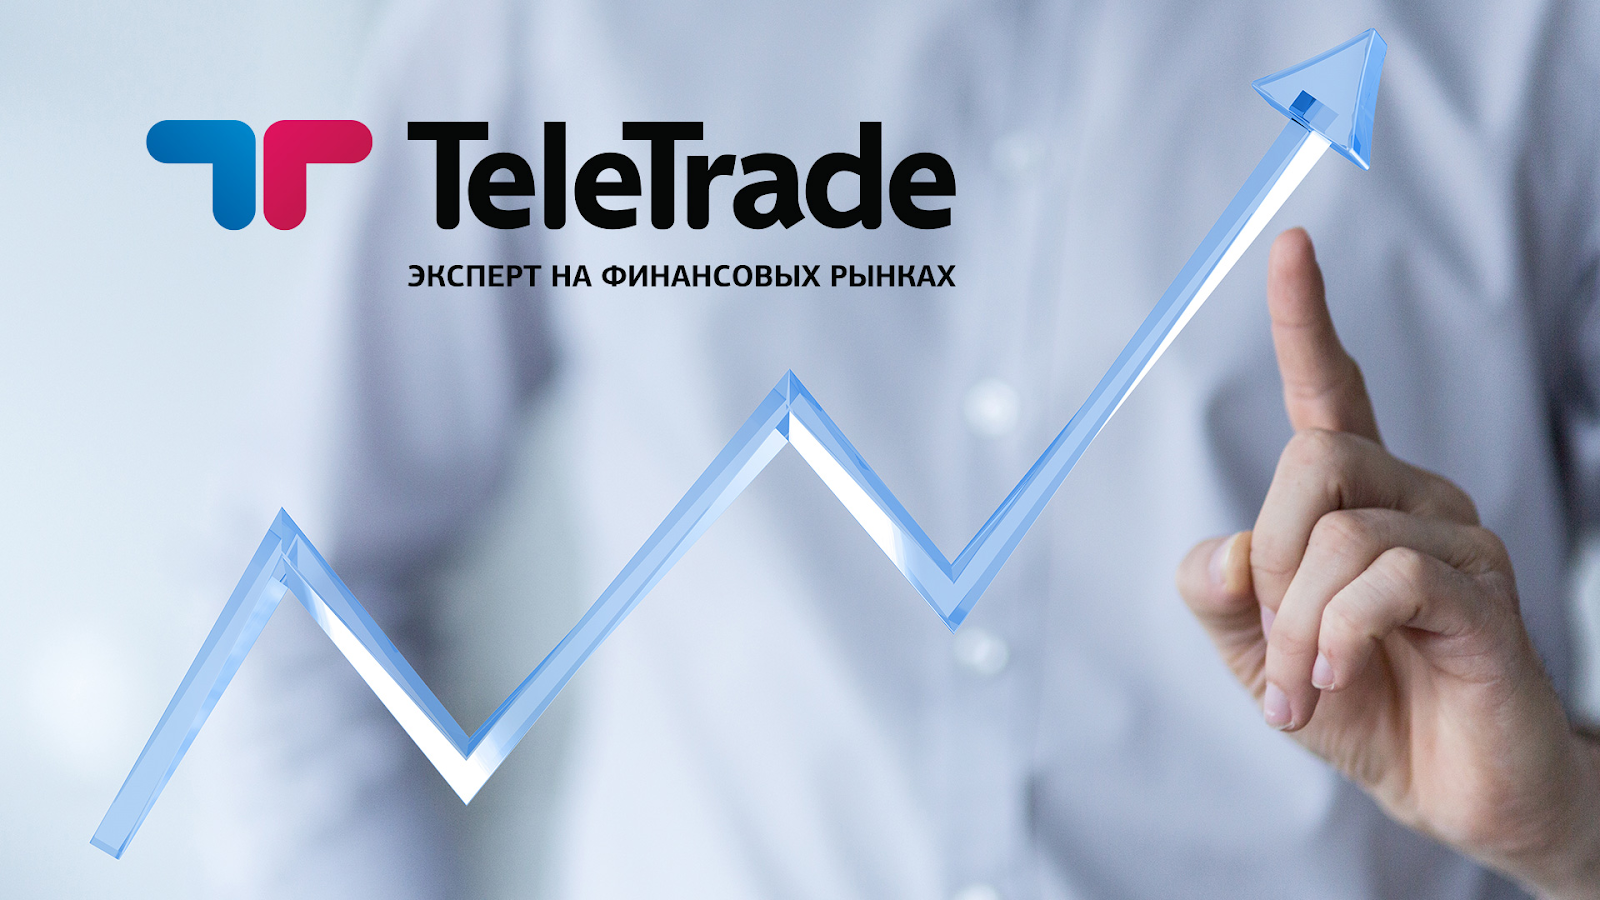 tele trade forex trading